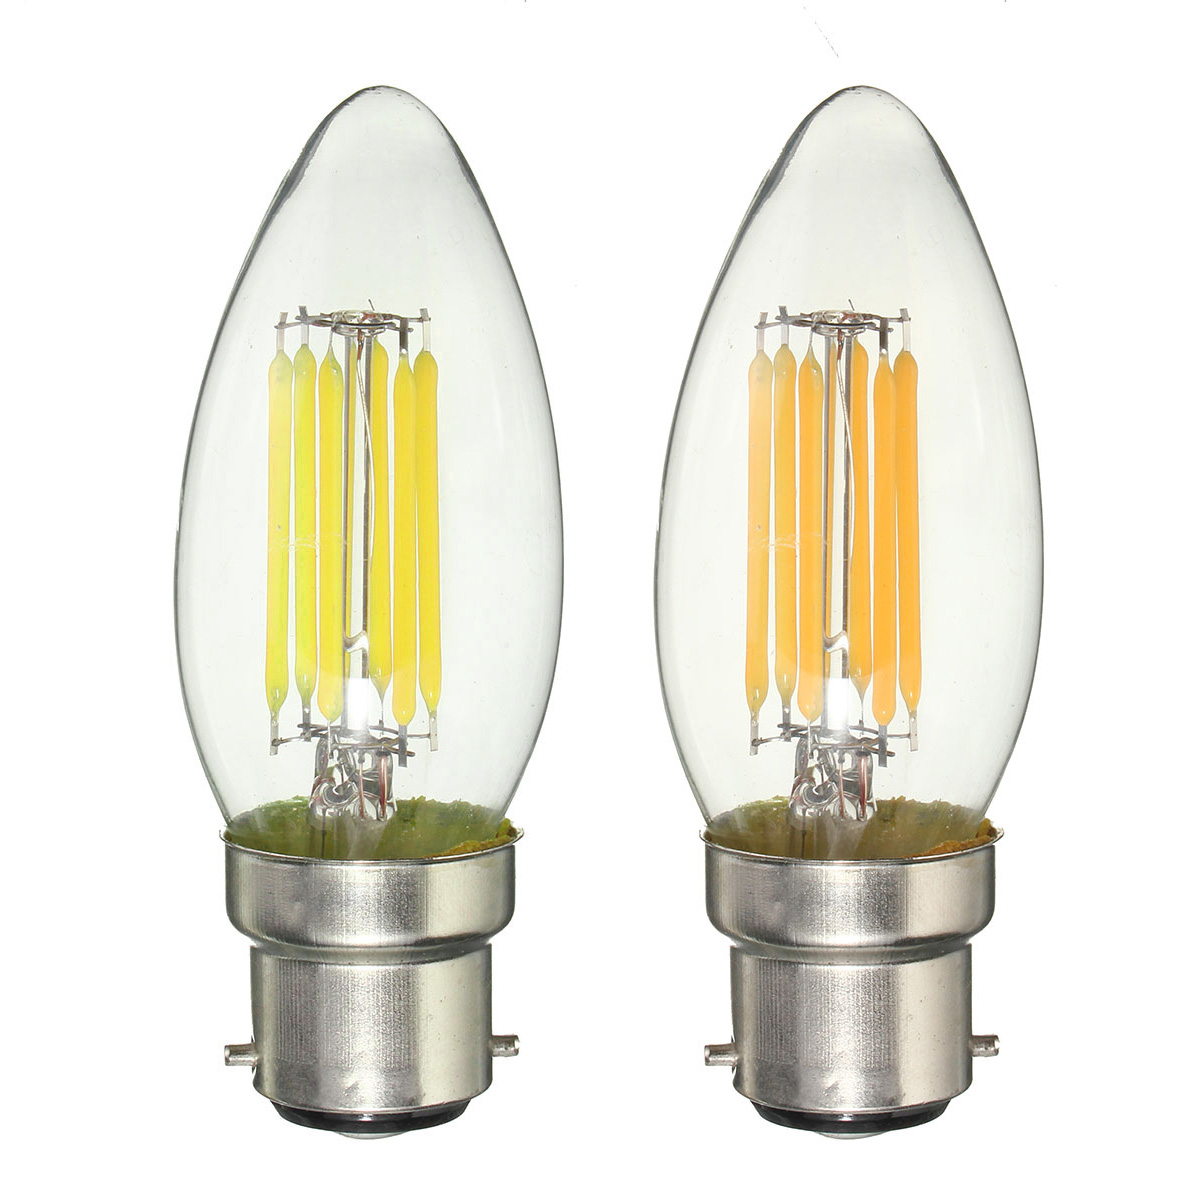 Dimmable-B22-C35-6W-COB-Pure-White-Warm-White-Edison-Retro-Light-Lamp-Bulb-AC220V-1069706-5